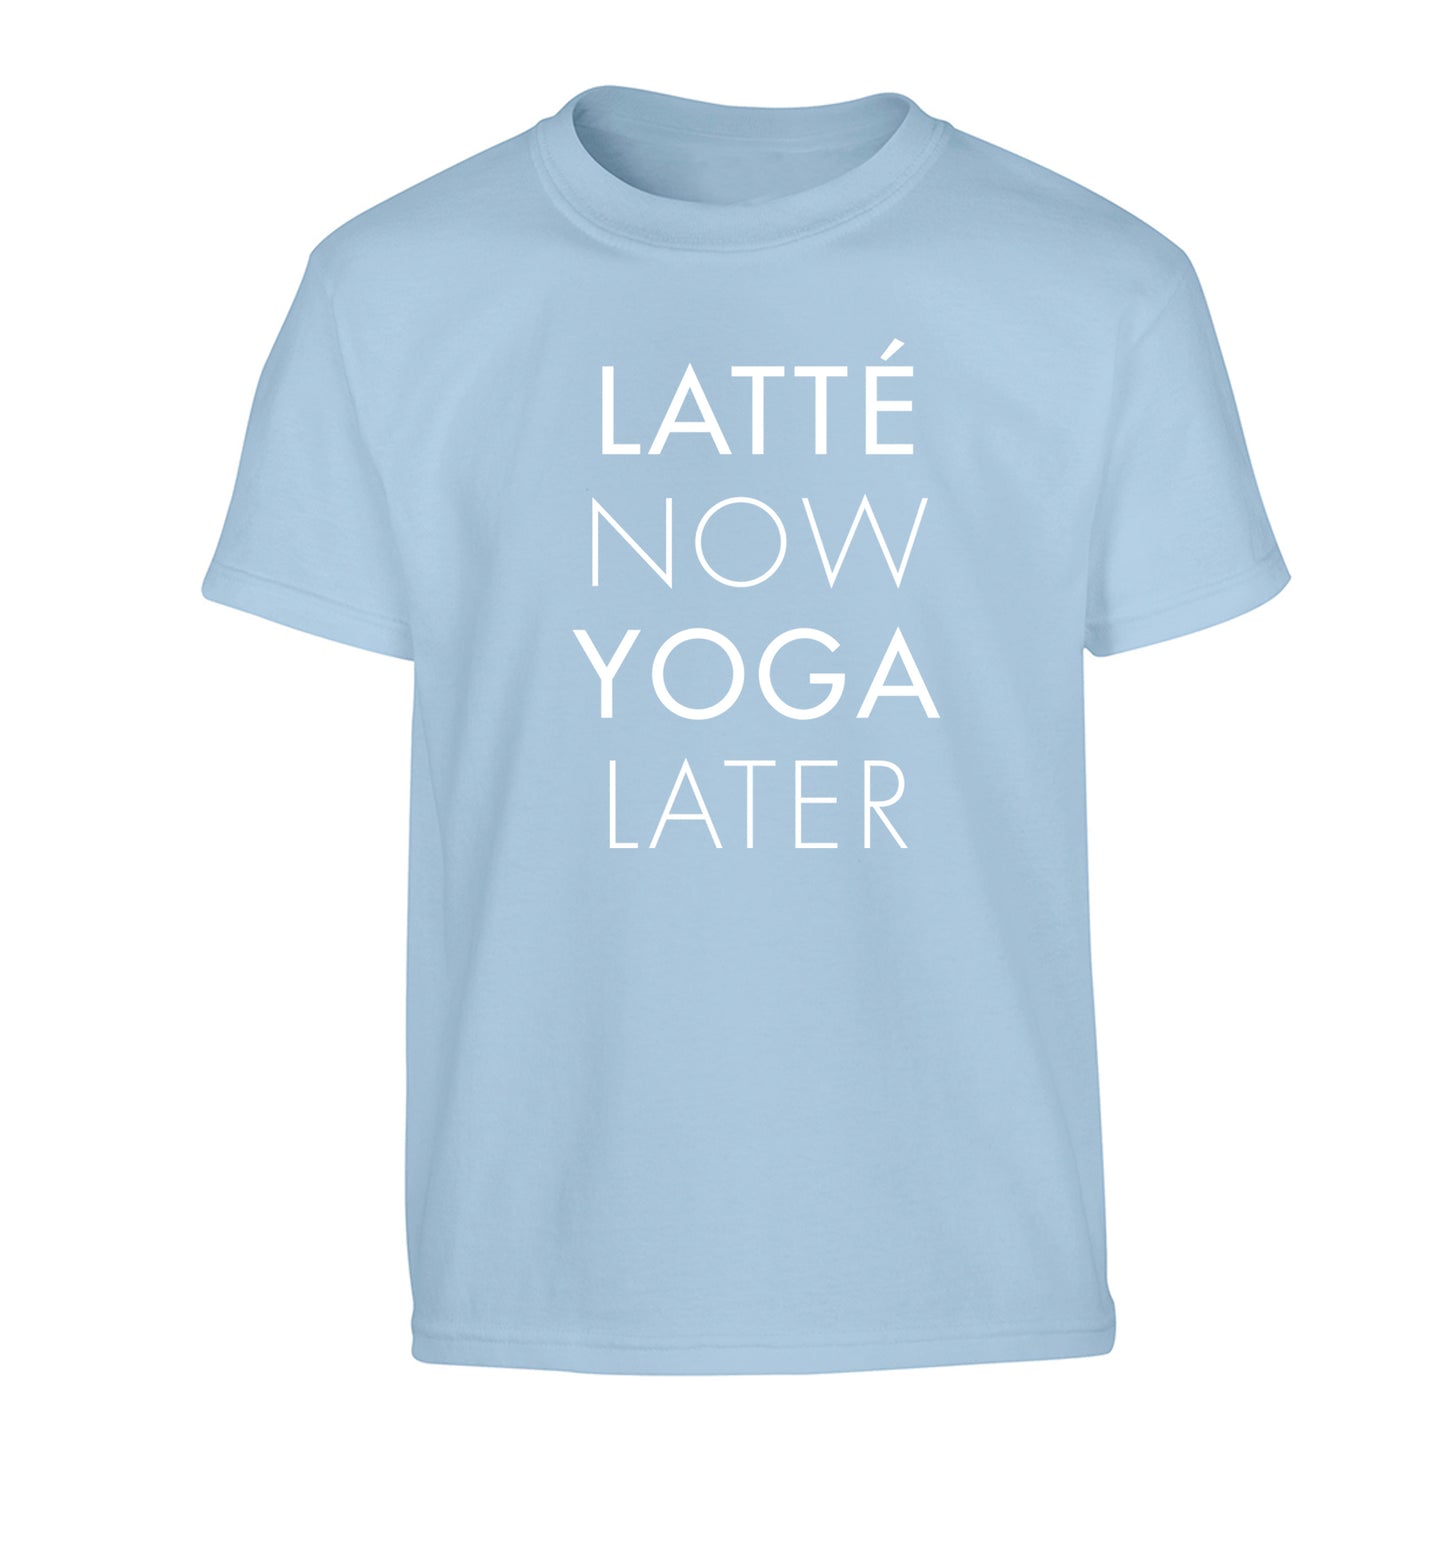 Latte now yoga later Children's light blue Tshirt 12-14 Years